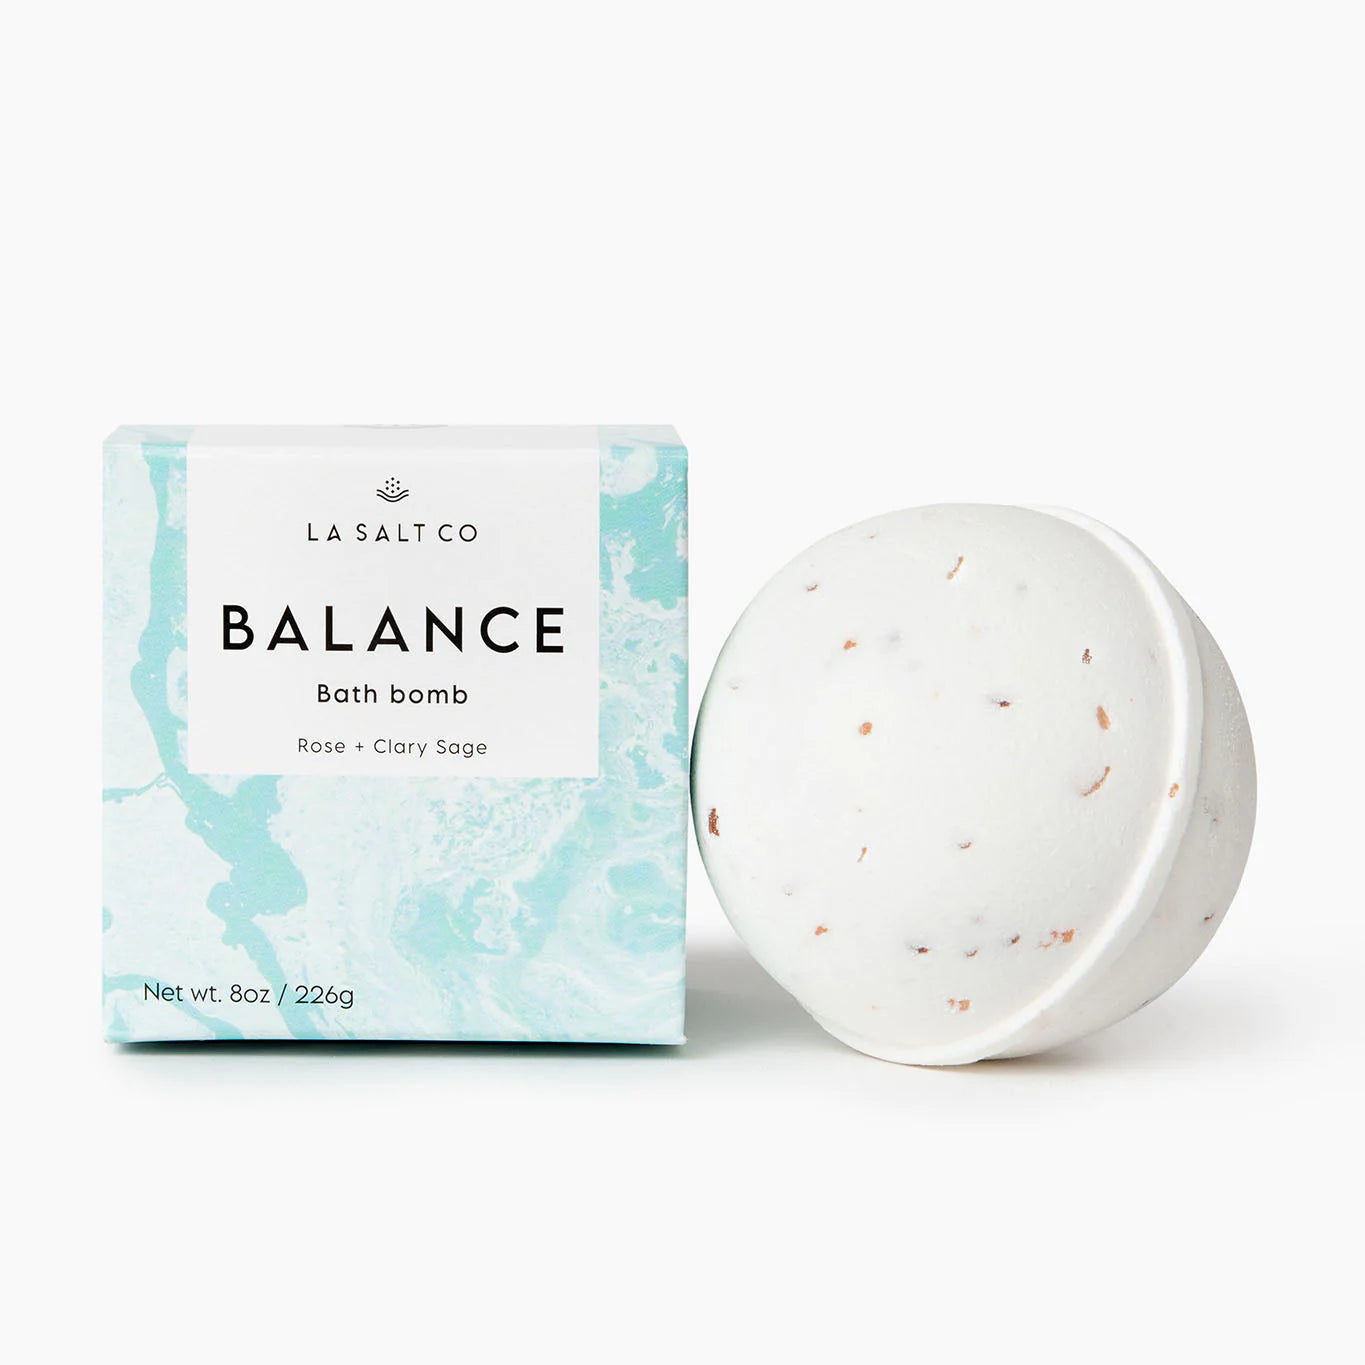 LA Salt Co Balance Bath Bomb